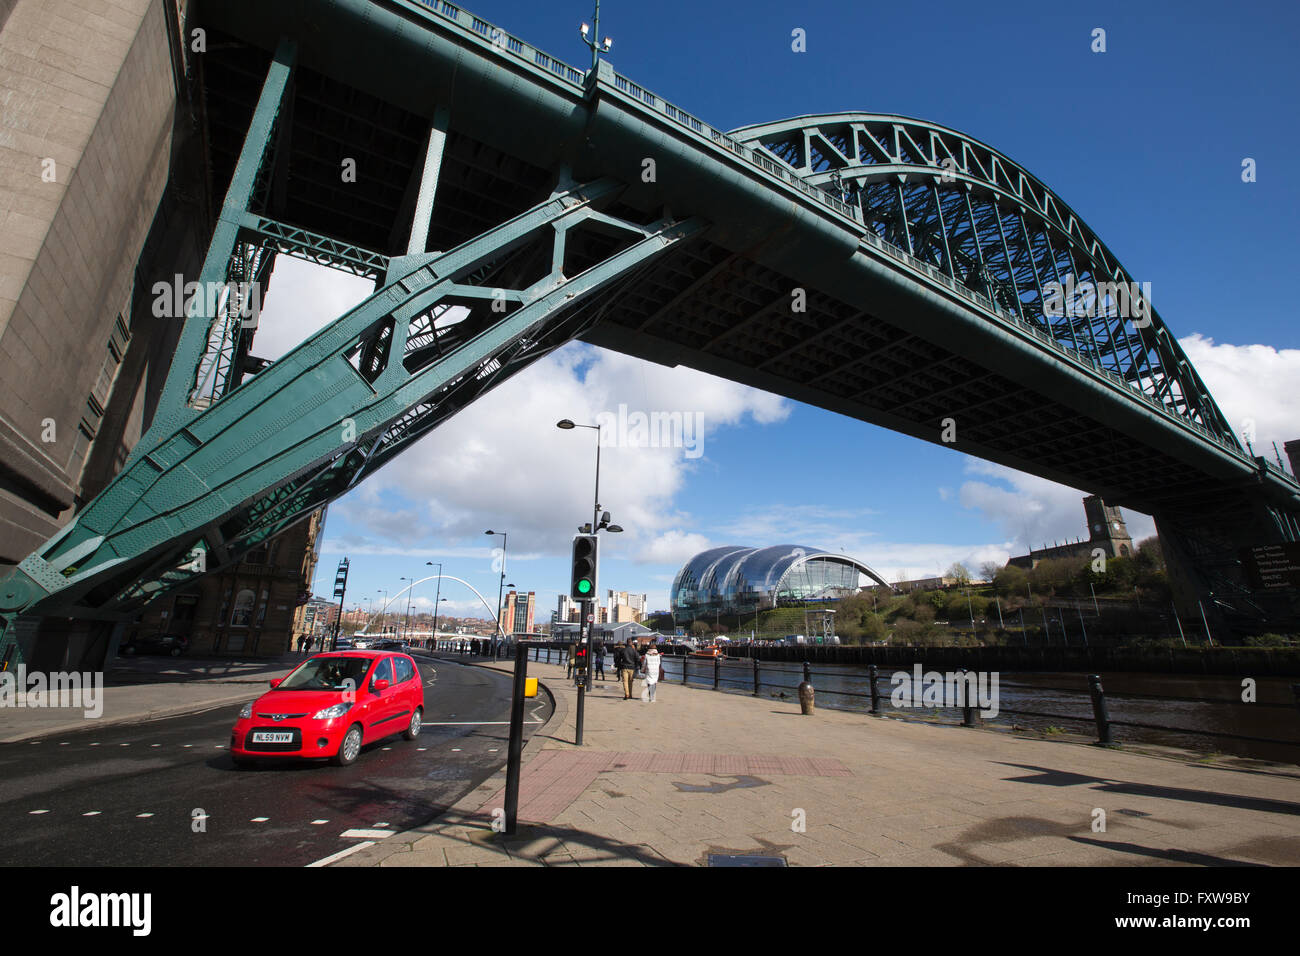 The Tyne Bridge, linking the City of Newcastle with the town of Gateshead, Newcastle, Tyneside, North England, UK Stock Photo